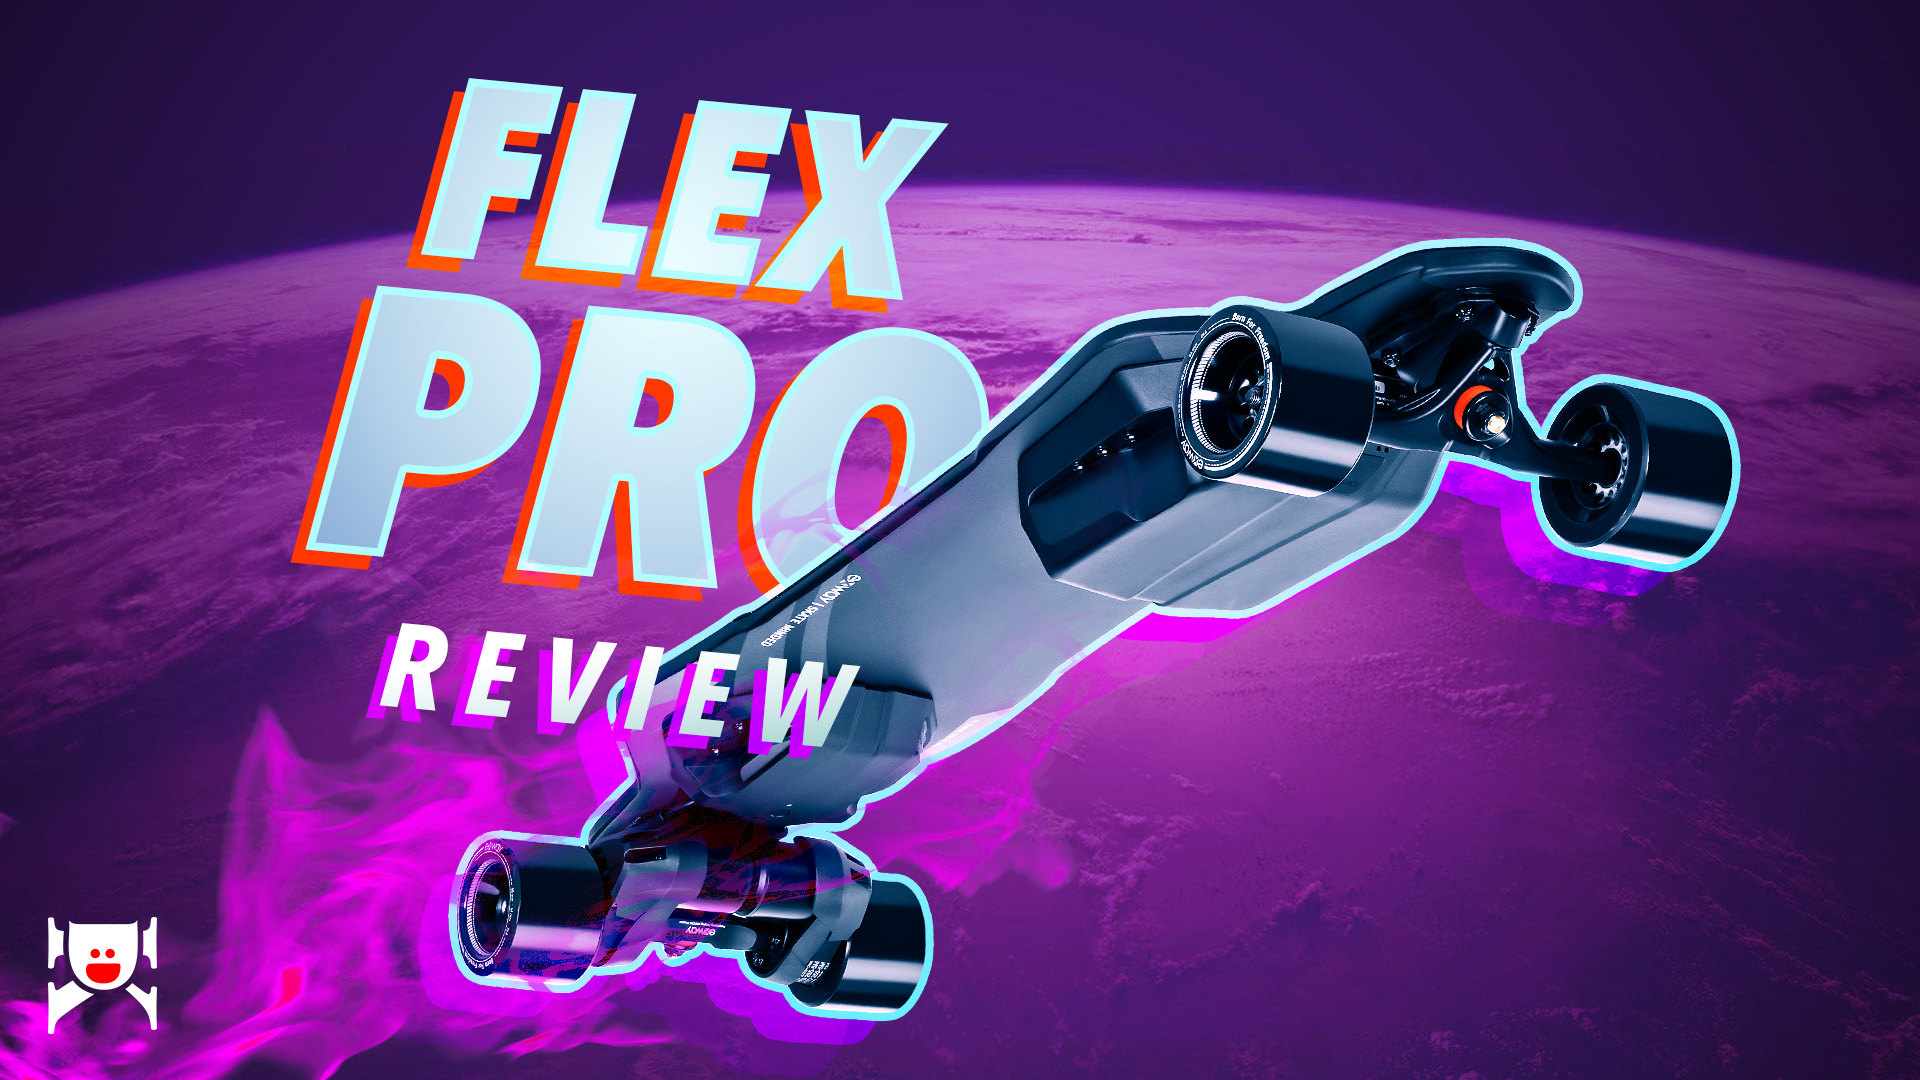 Exway Flex Pro Review The hardcore version of Flex!